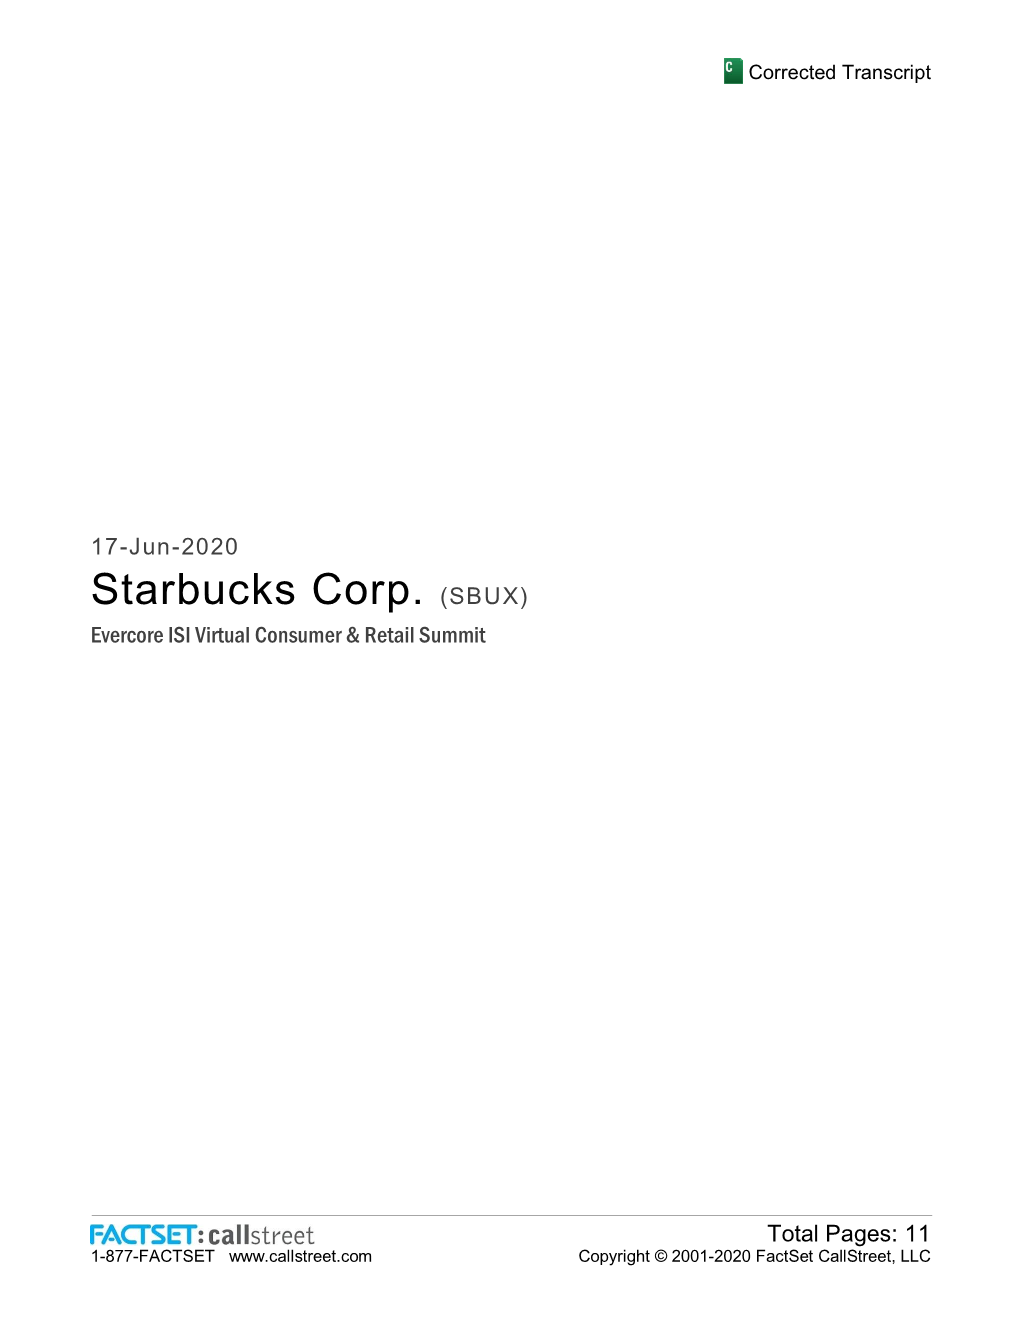 Starbucks Corp. (SBUX) Evercore ISI Virtual Consumer & Retail Summit